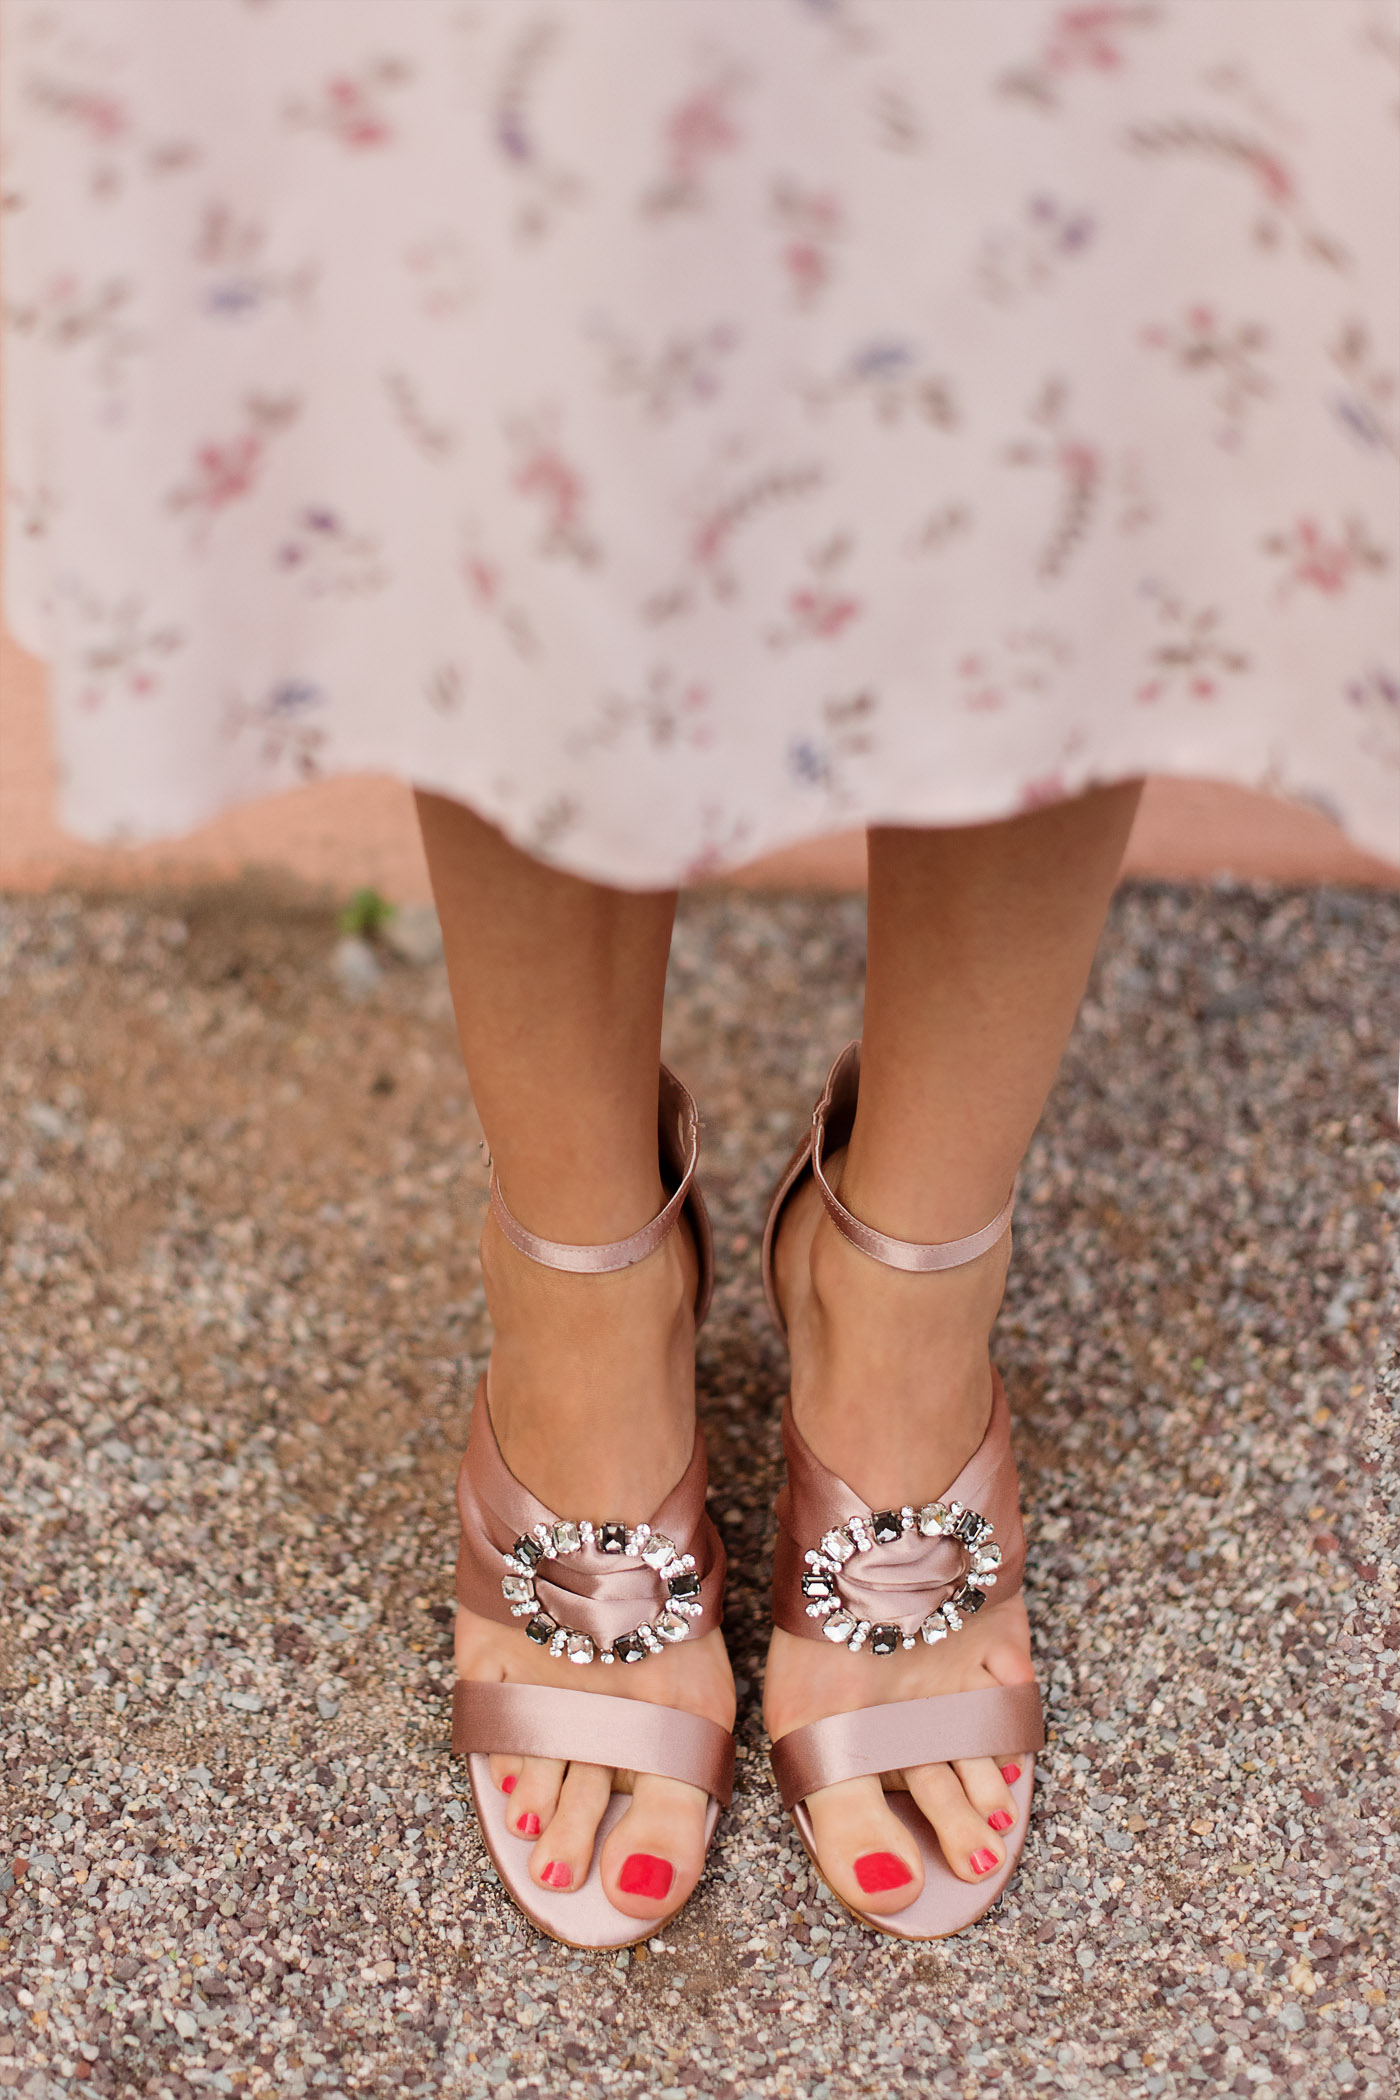 hm-off-shoulder-dress--zara-high-heels-sandaletten-fashionblog